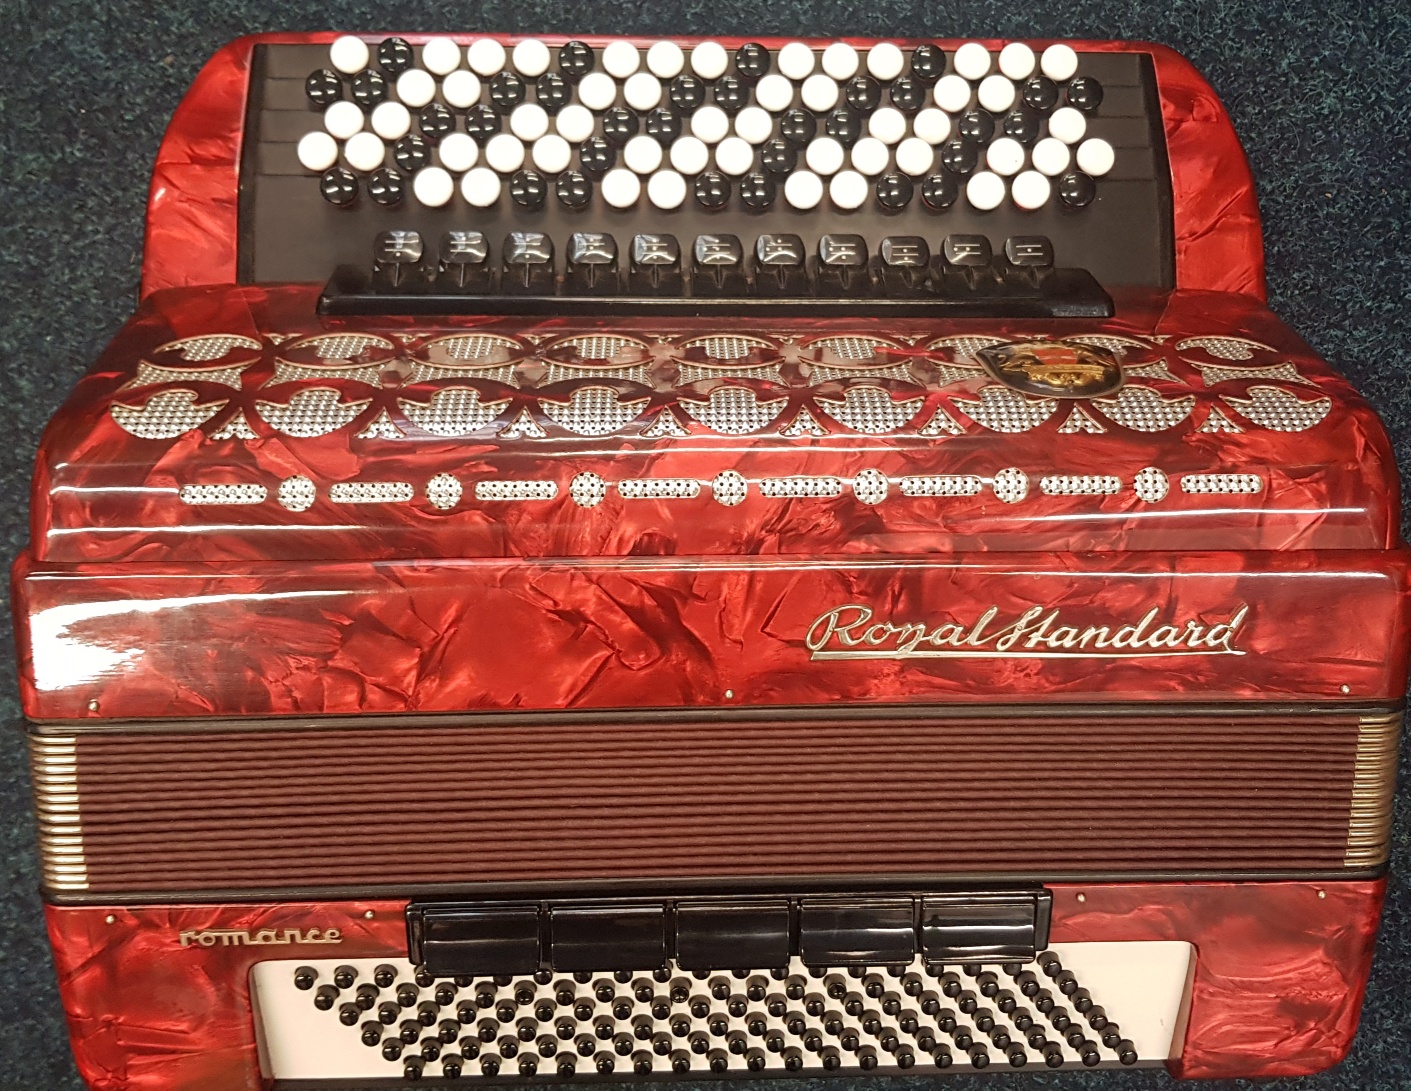 Royal Standard 'B' System Button accordion - The Accordion Shop